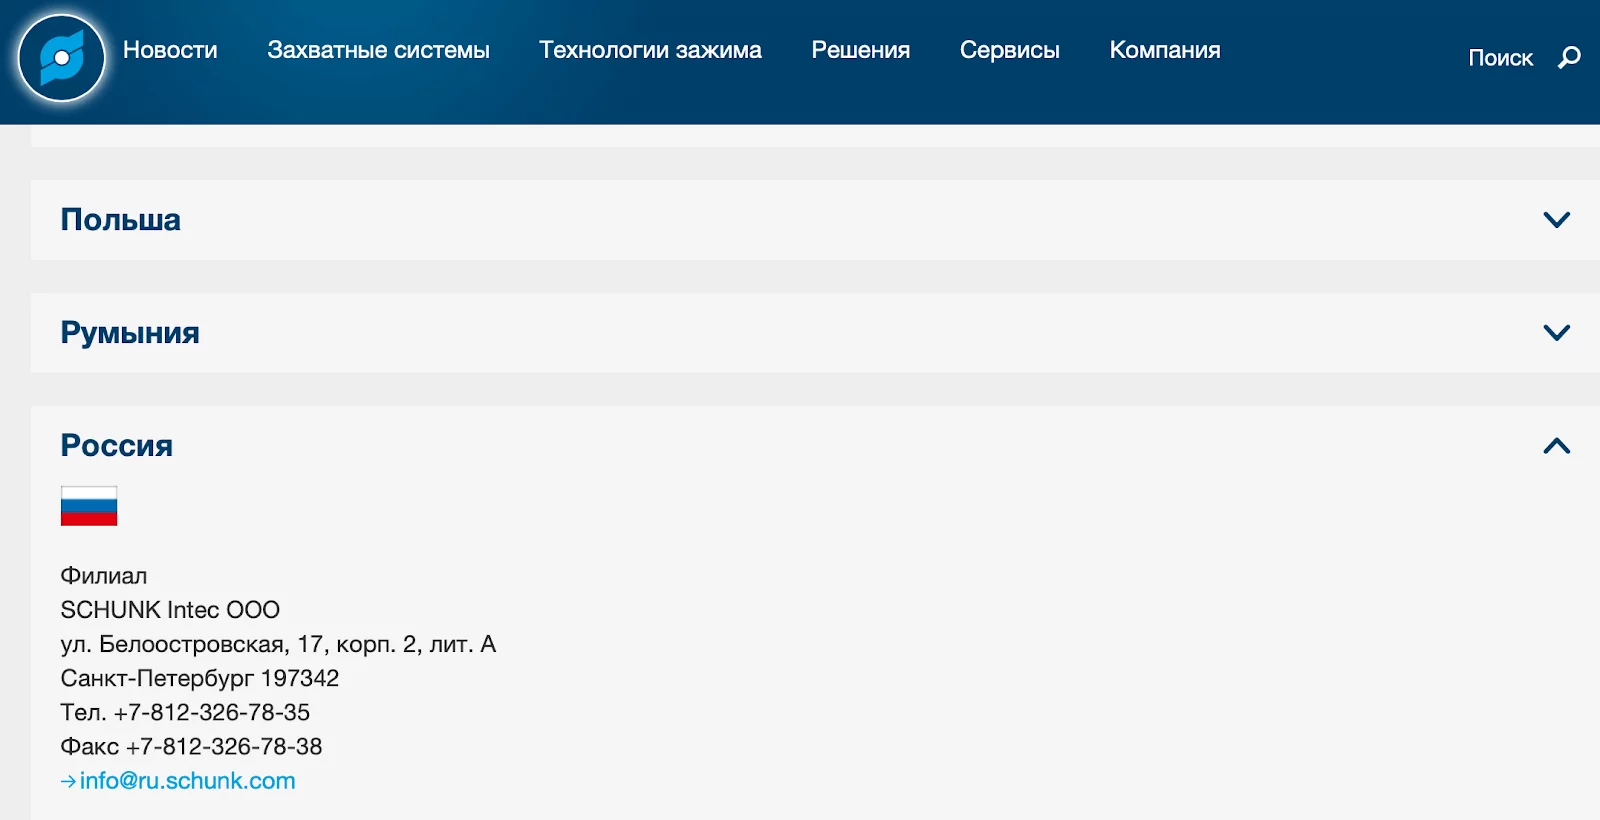 Schunk’s Russian representative office is located in St. Petersburg. Source: Schunk website ~